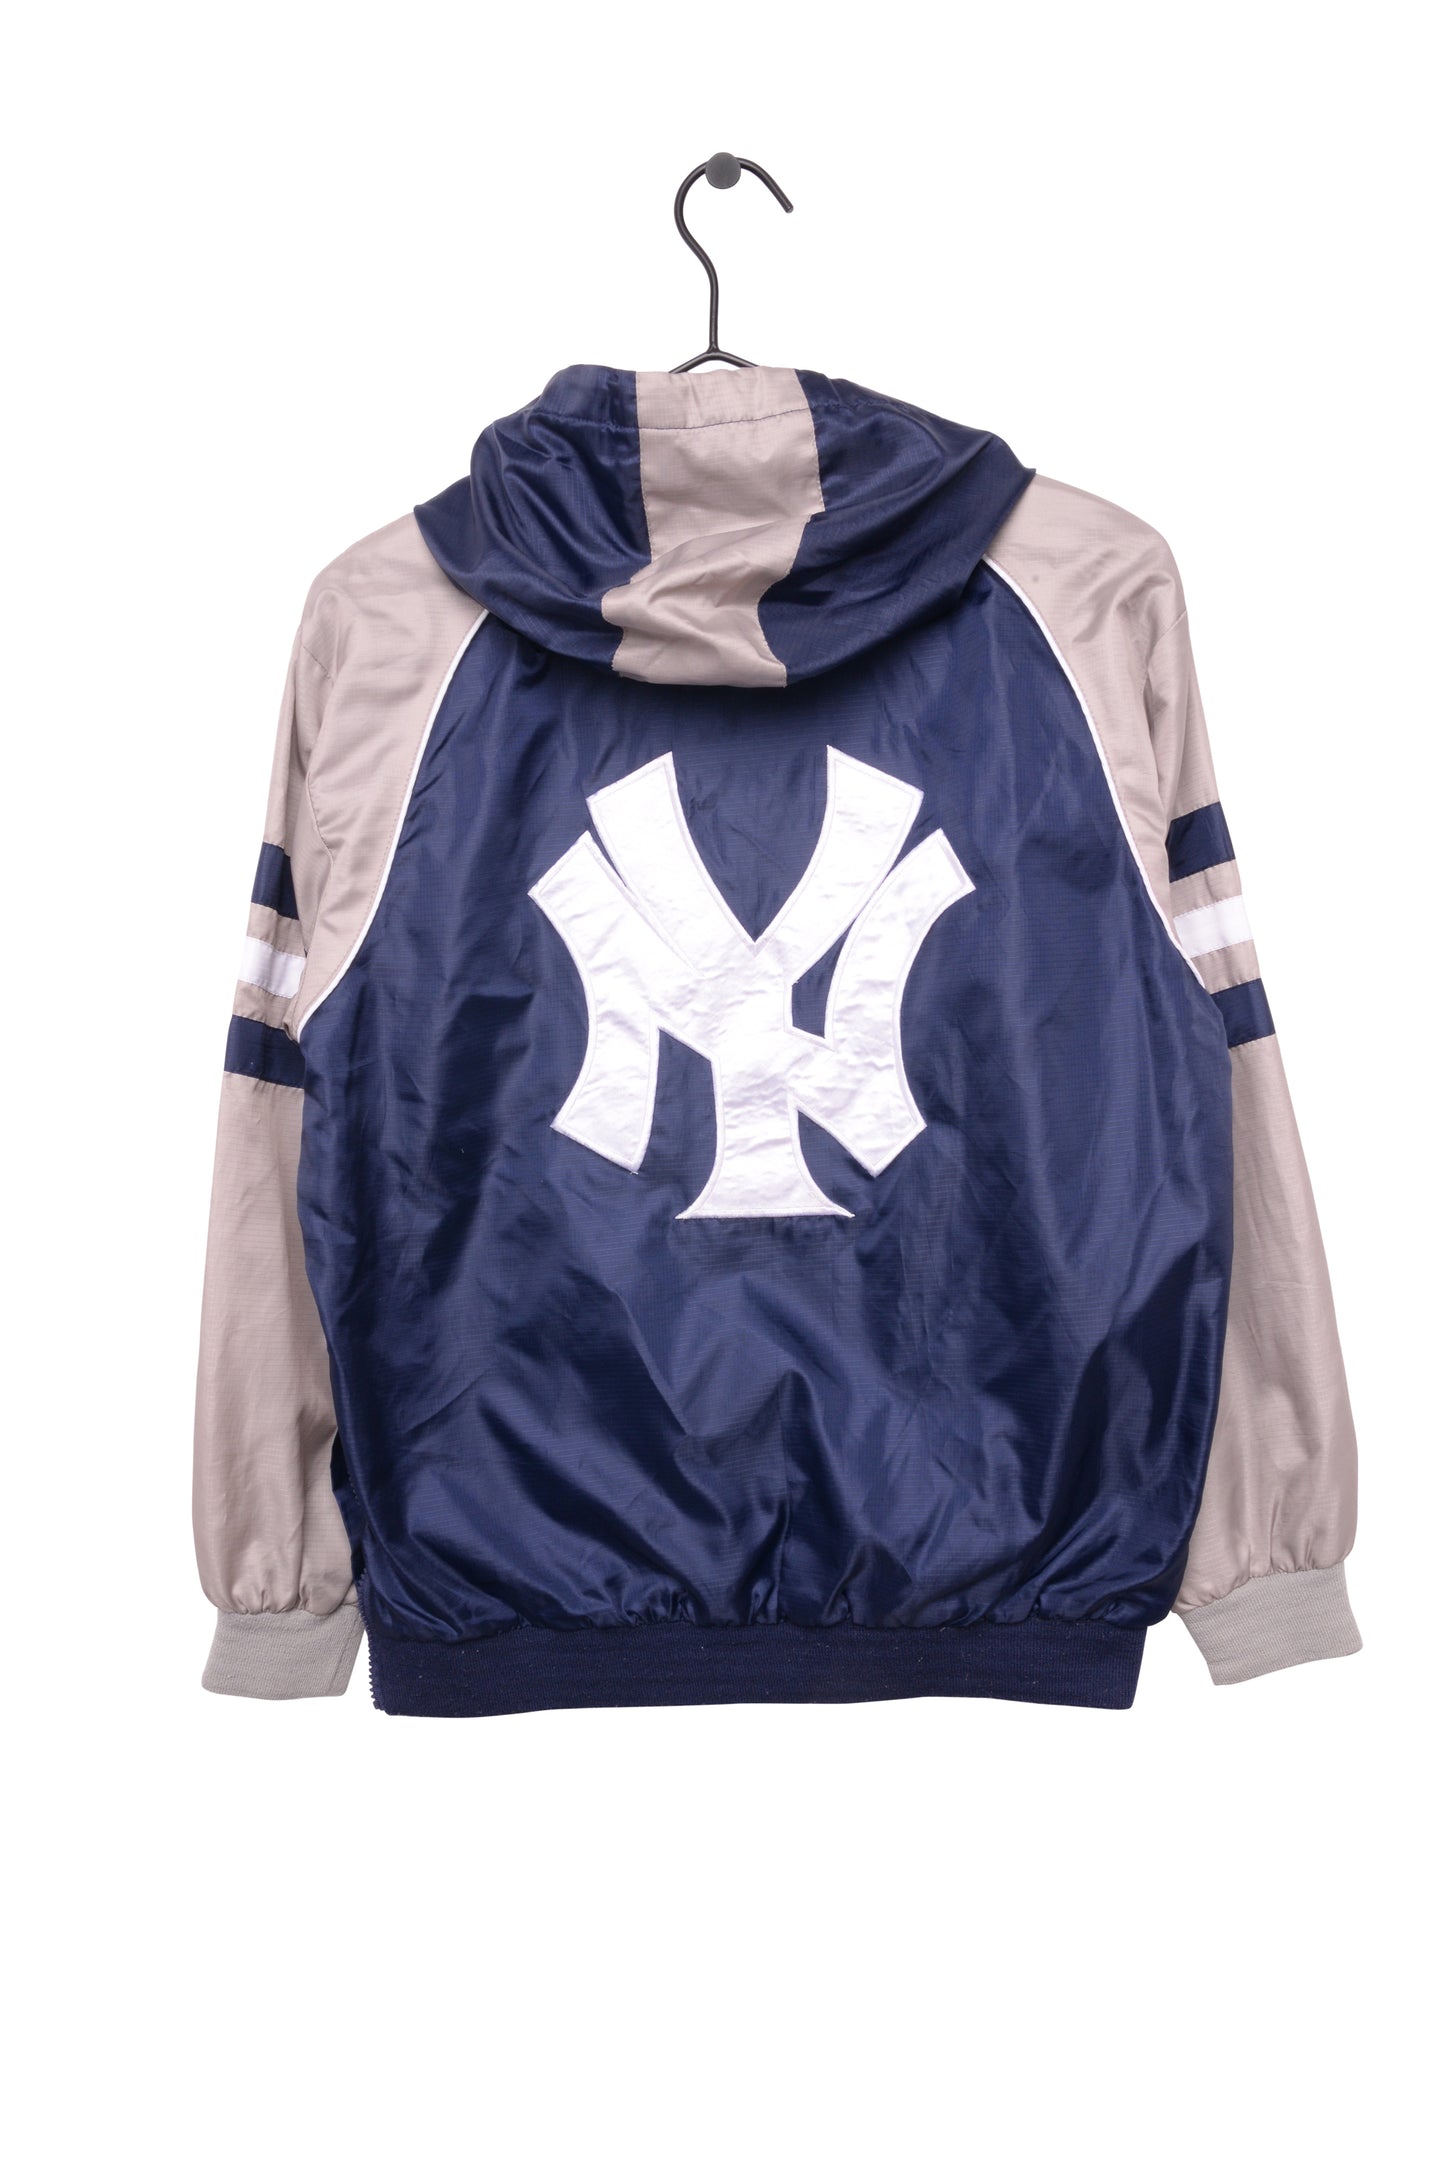 New York Yankees Windbreaker Jacket